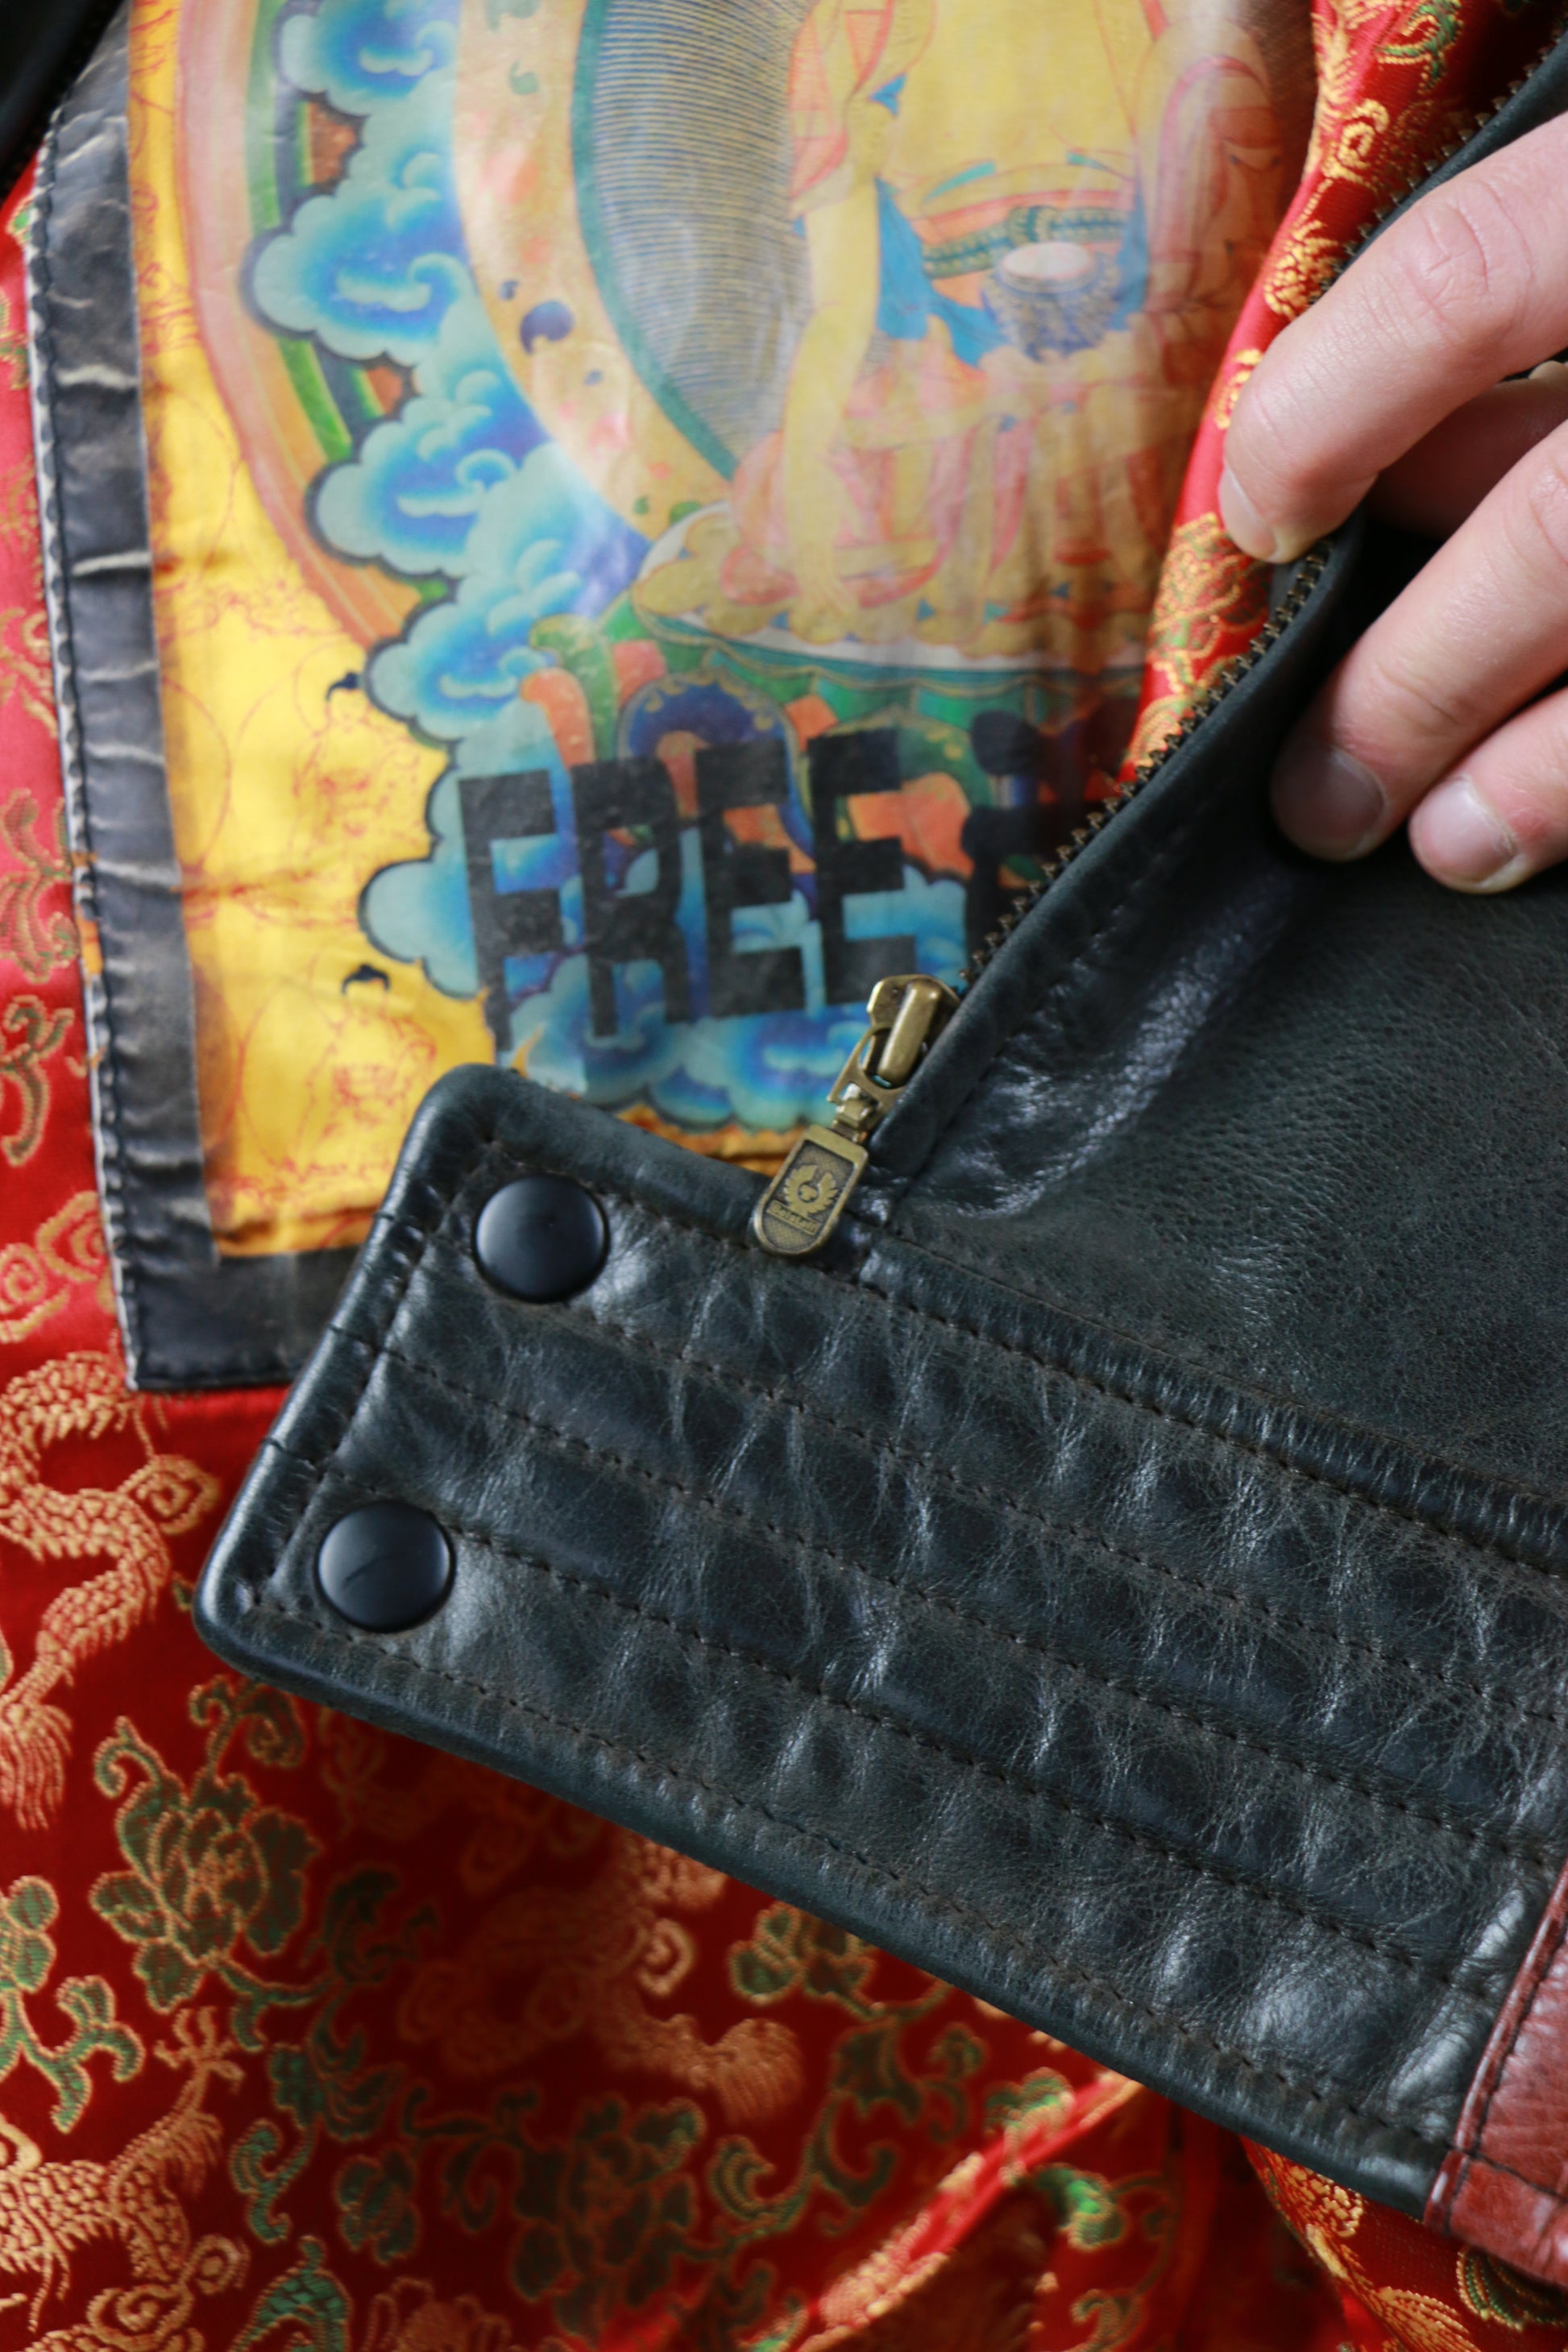 Belstaff 'Free Tibet Leather' Jacket, clochard92.com